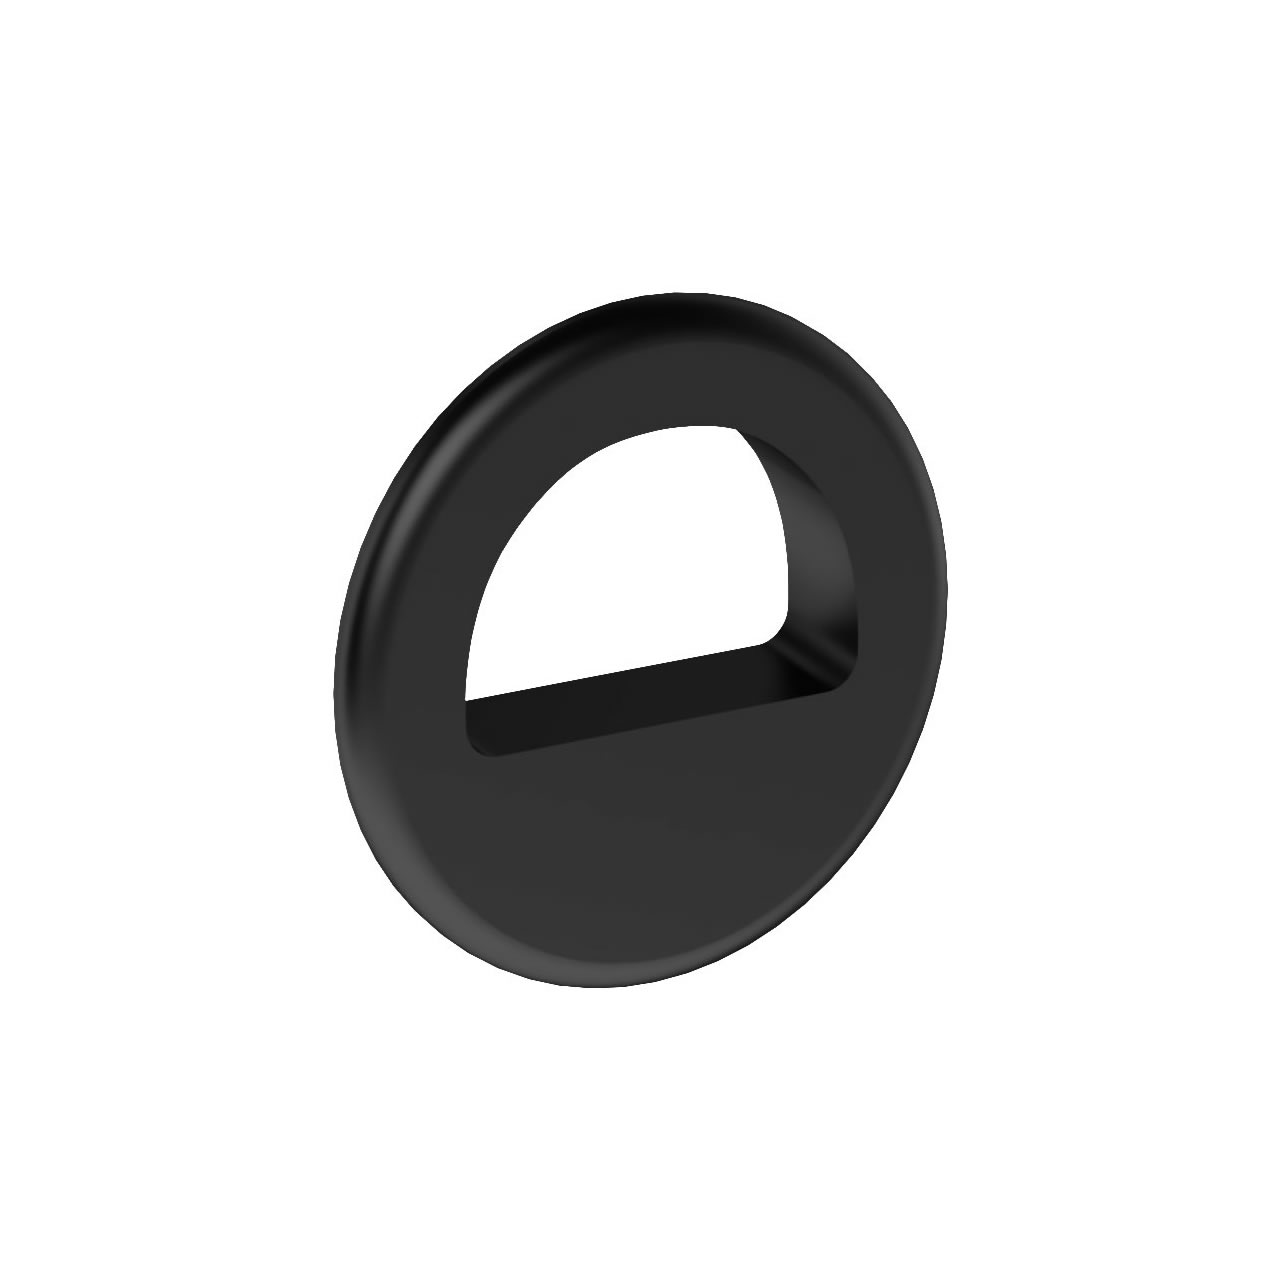 Matt black overflow ring without logo